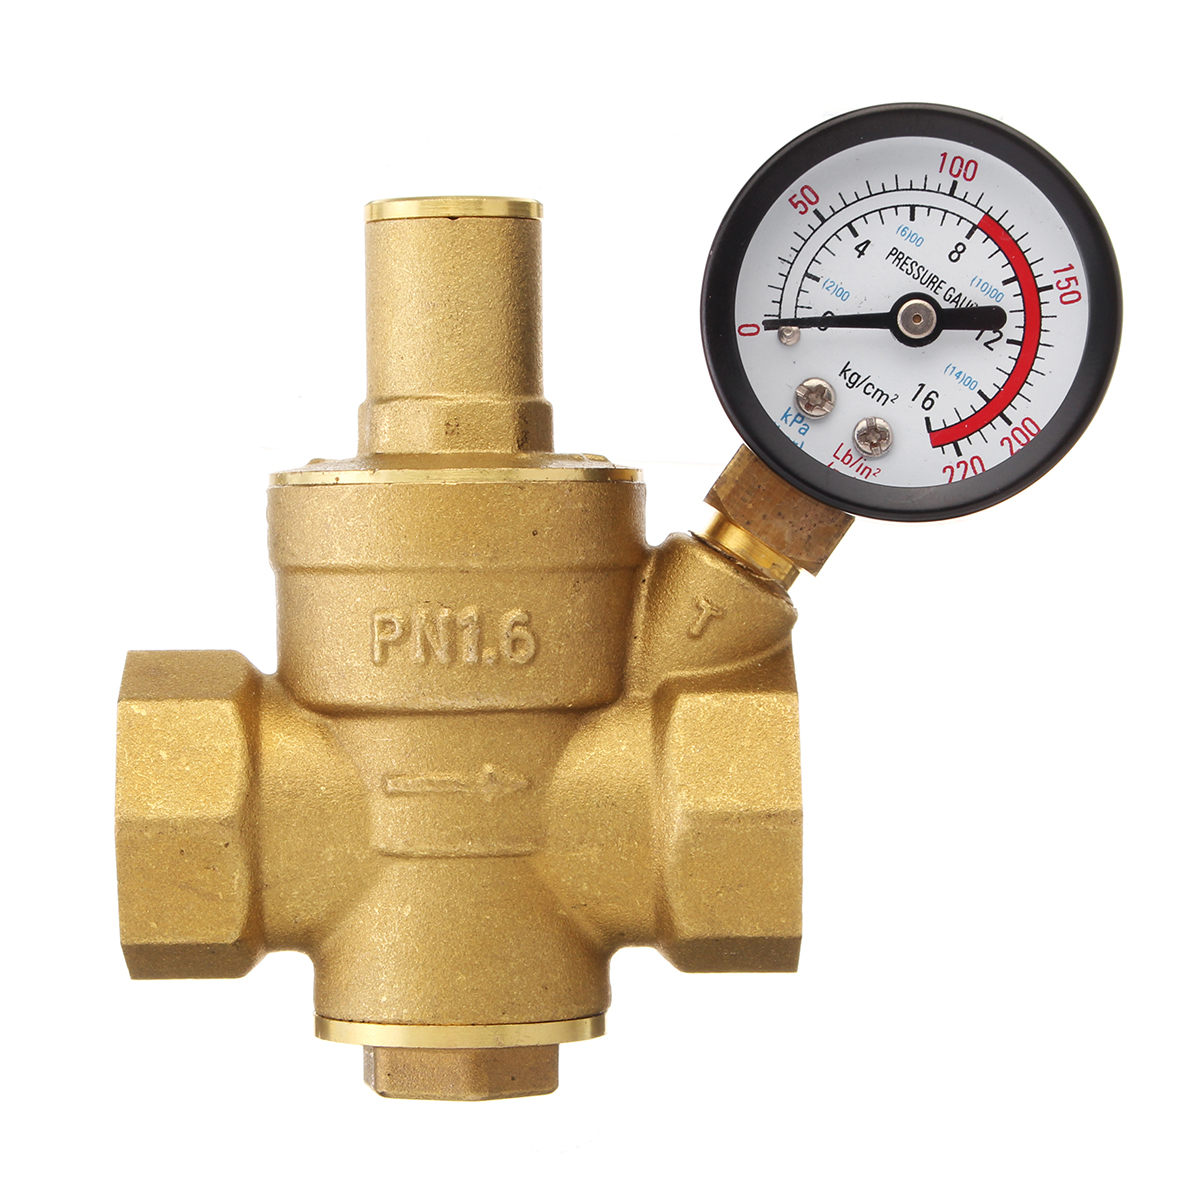 

3/4" DN20 Adjustable Brass Water Pressure Reducing Valve with Gauge Regulator Reducer